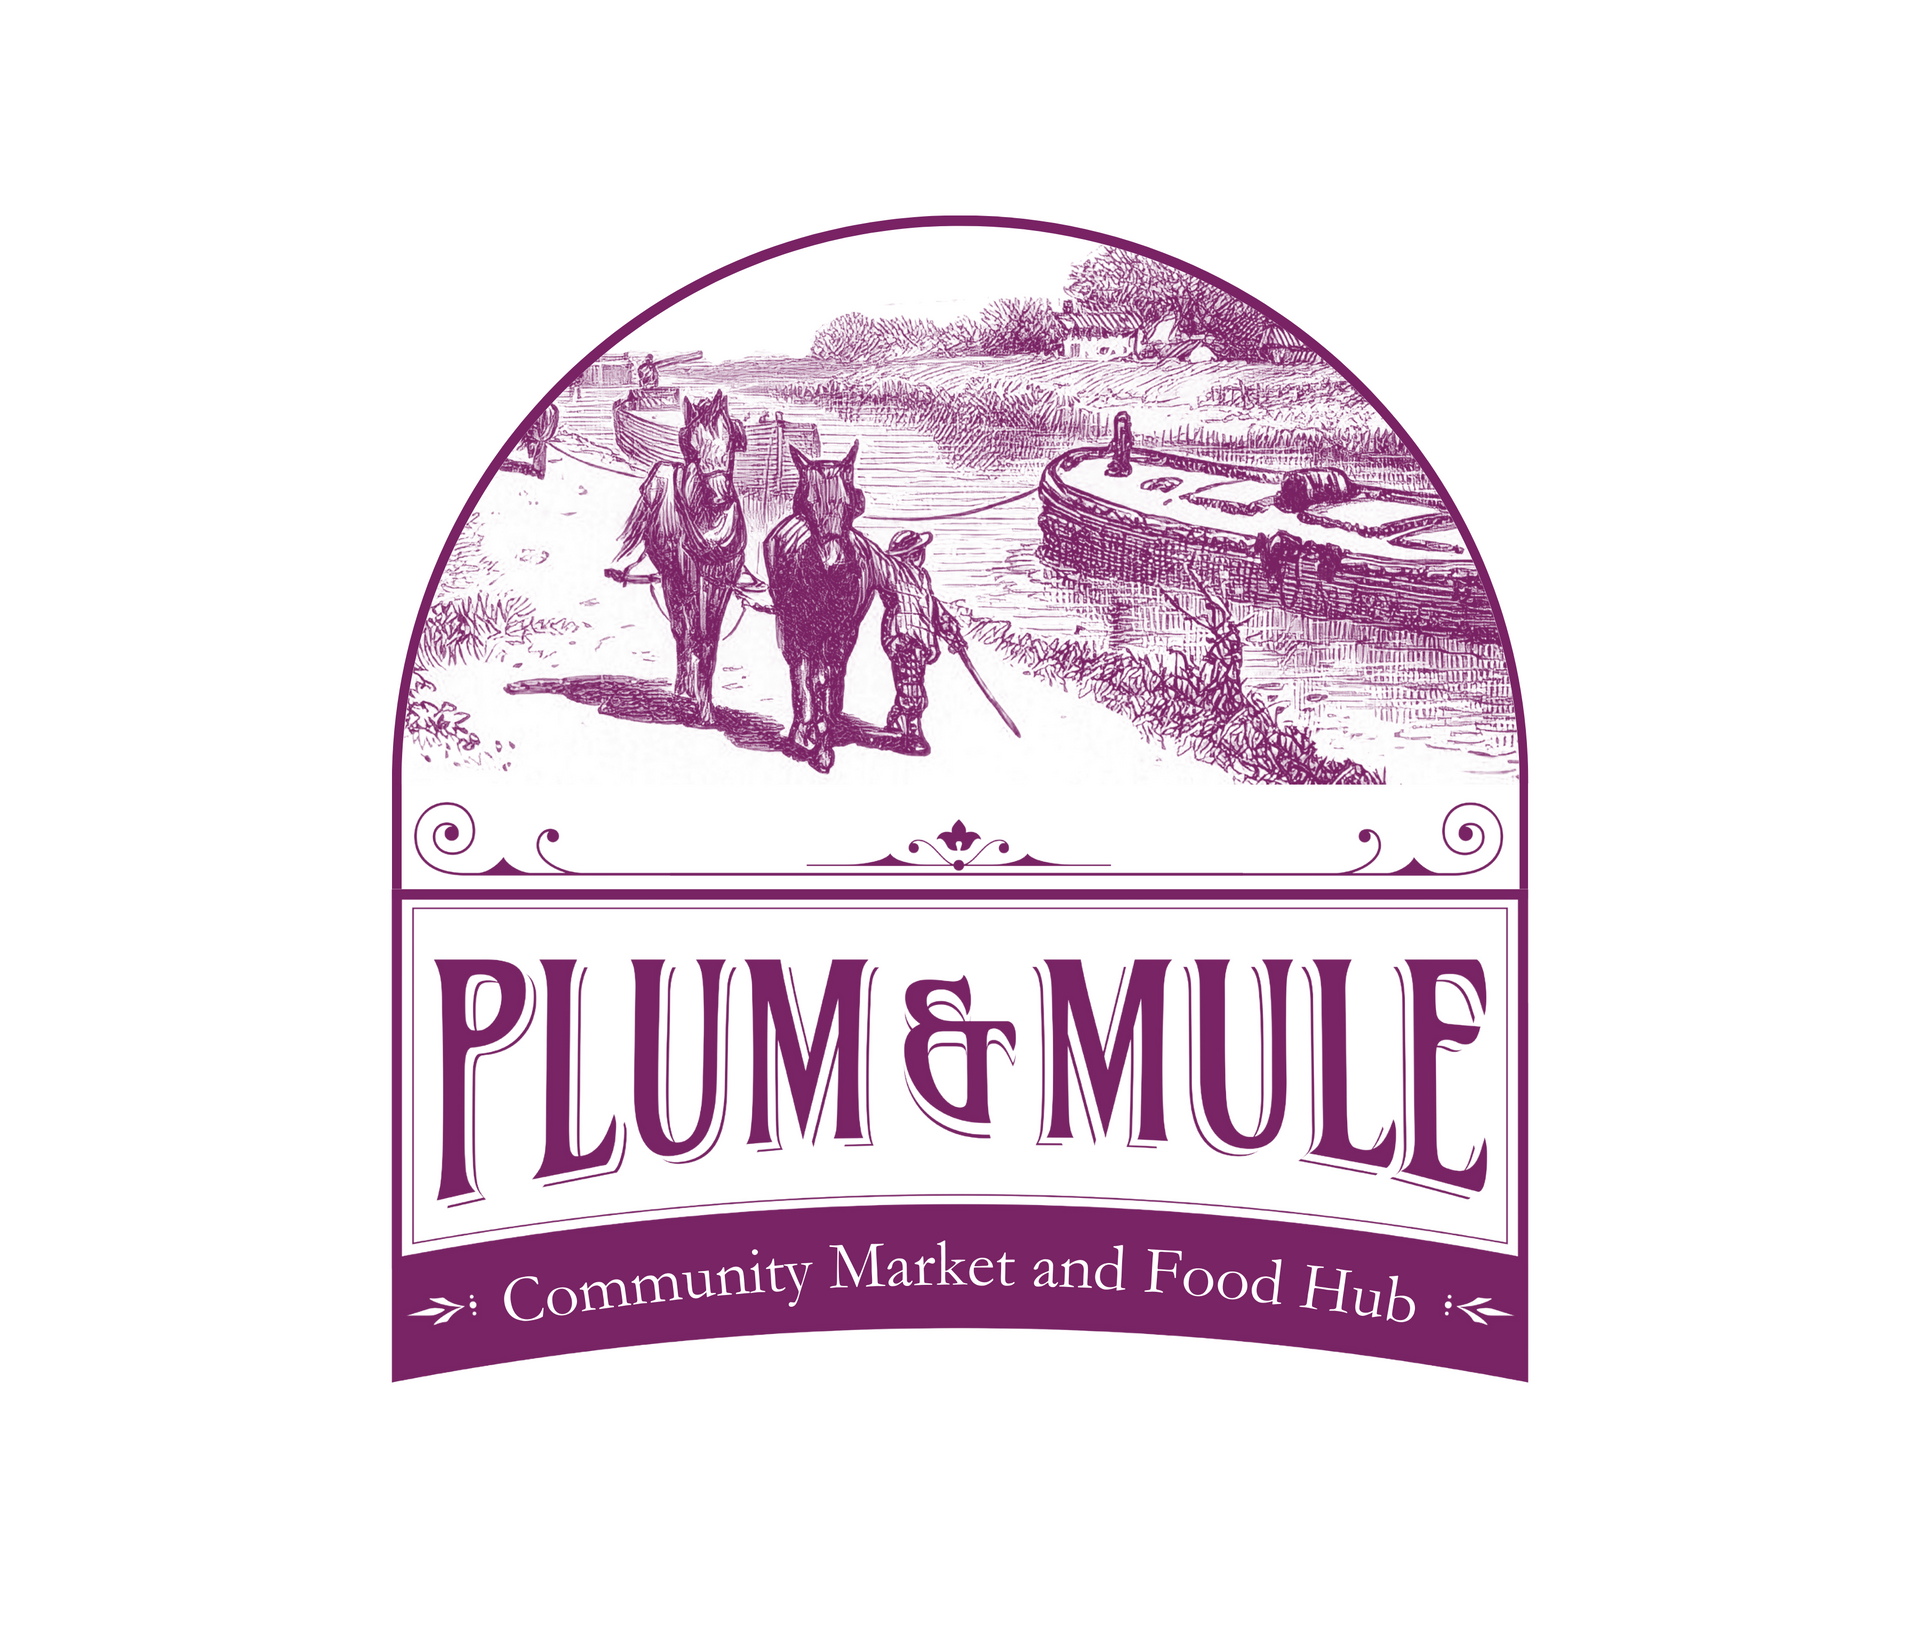 Plum & Mule Community Market